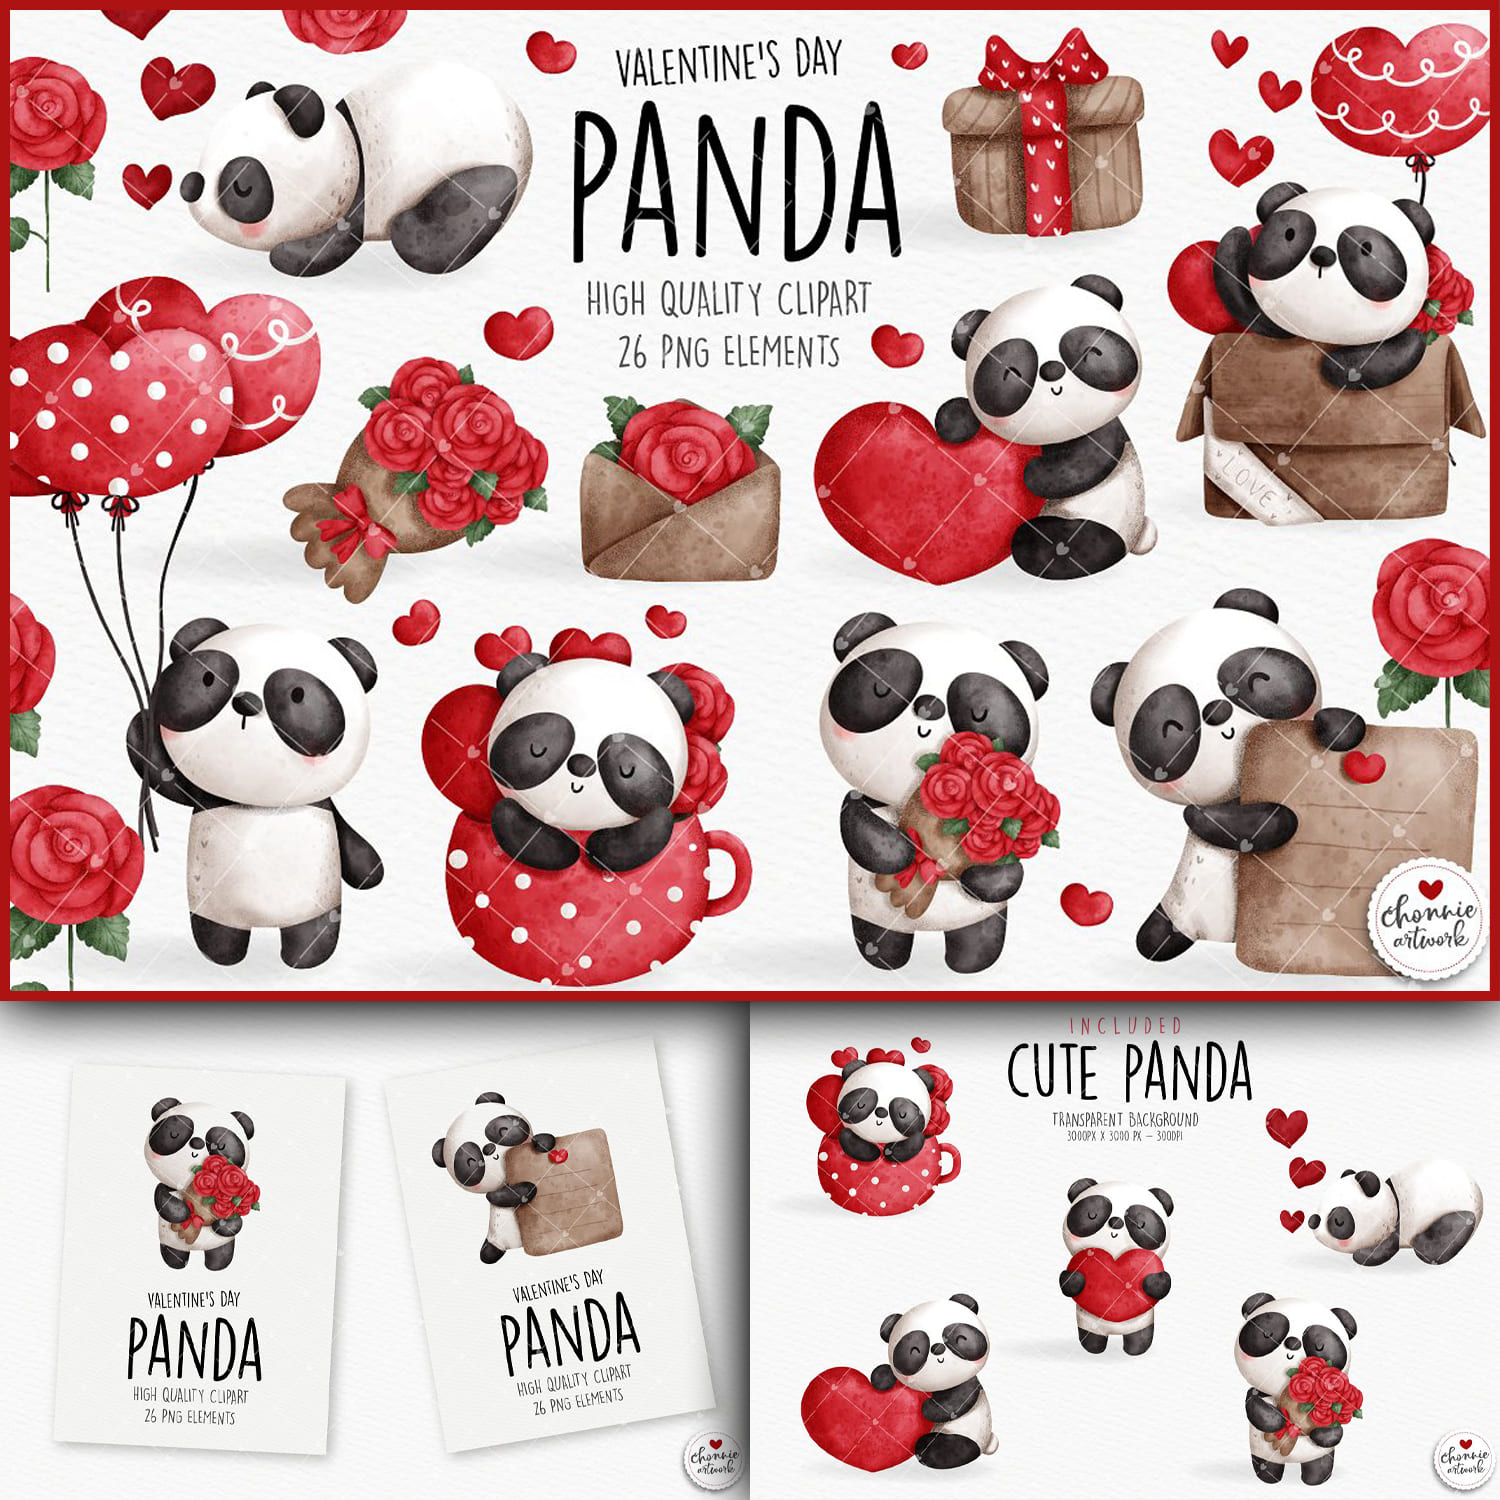 Valentine's Panda Clipart - main image preview.